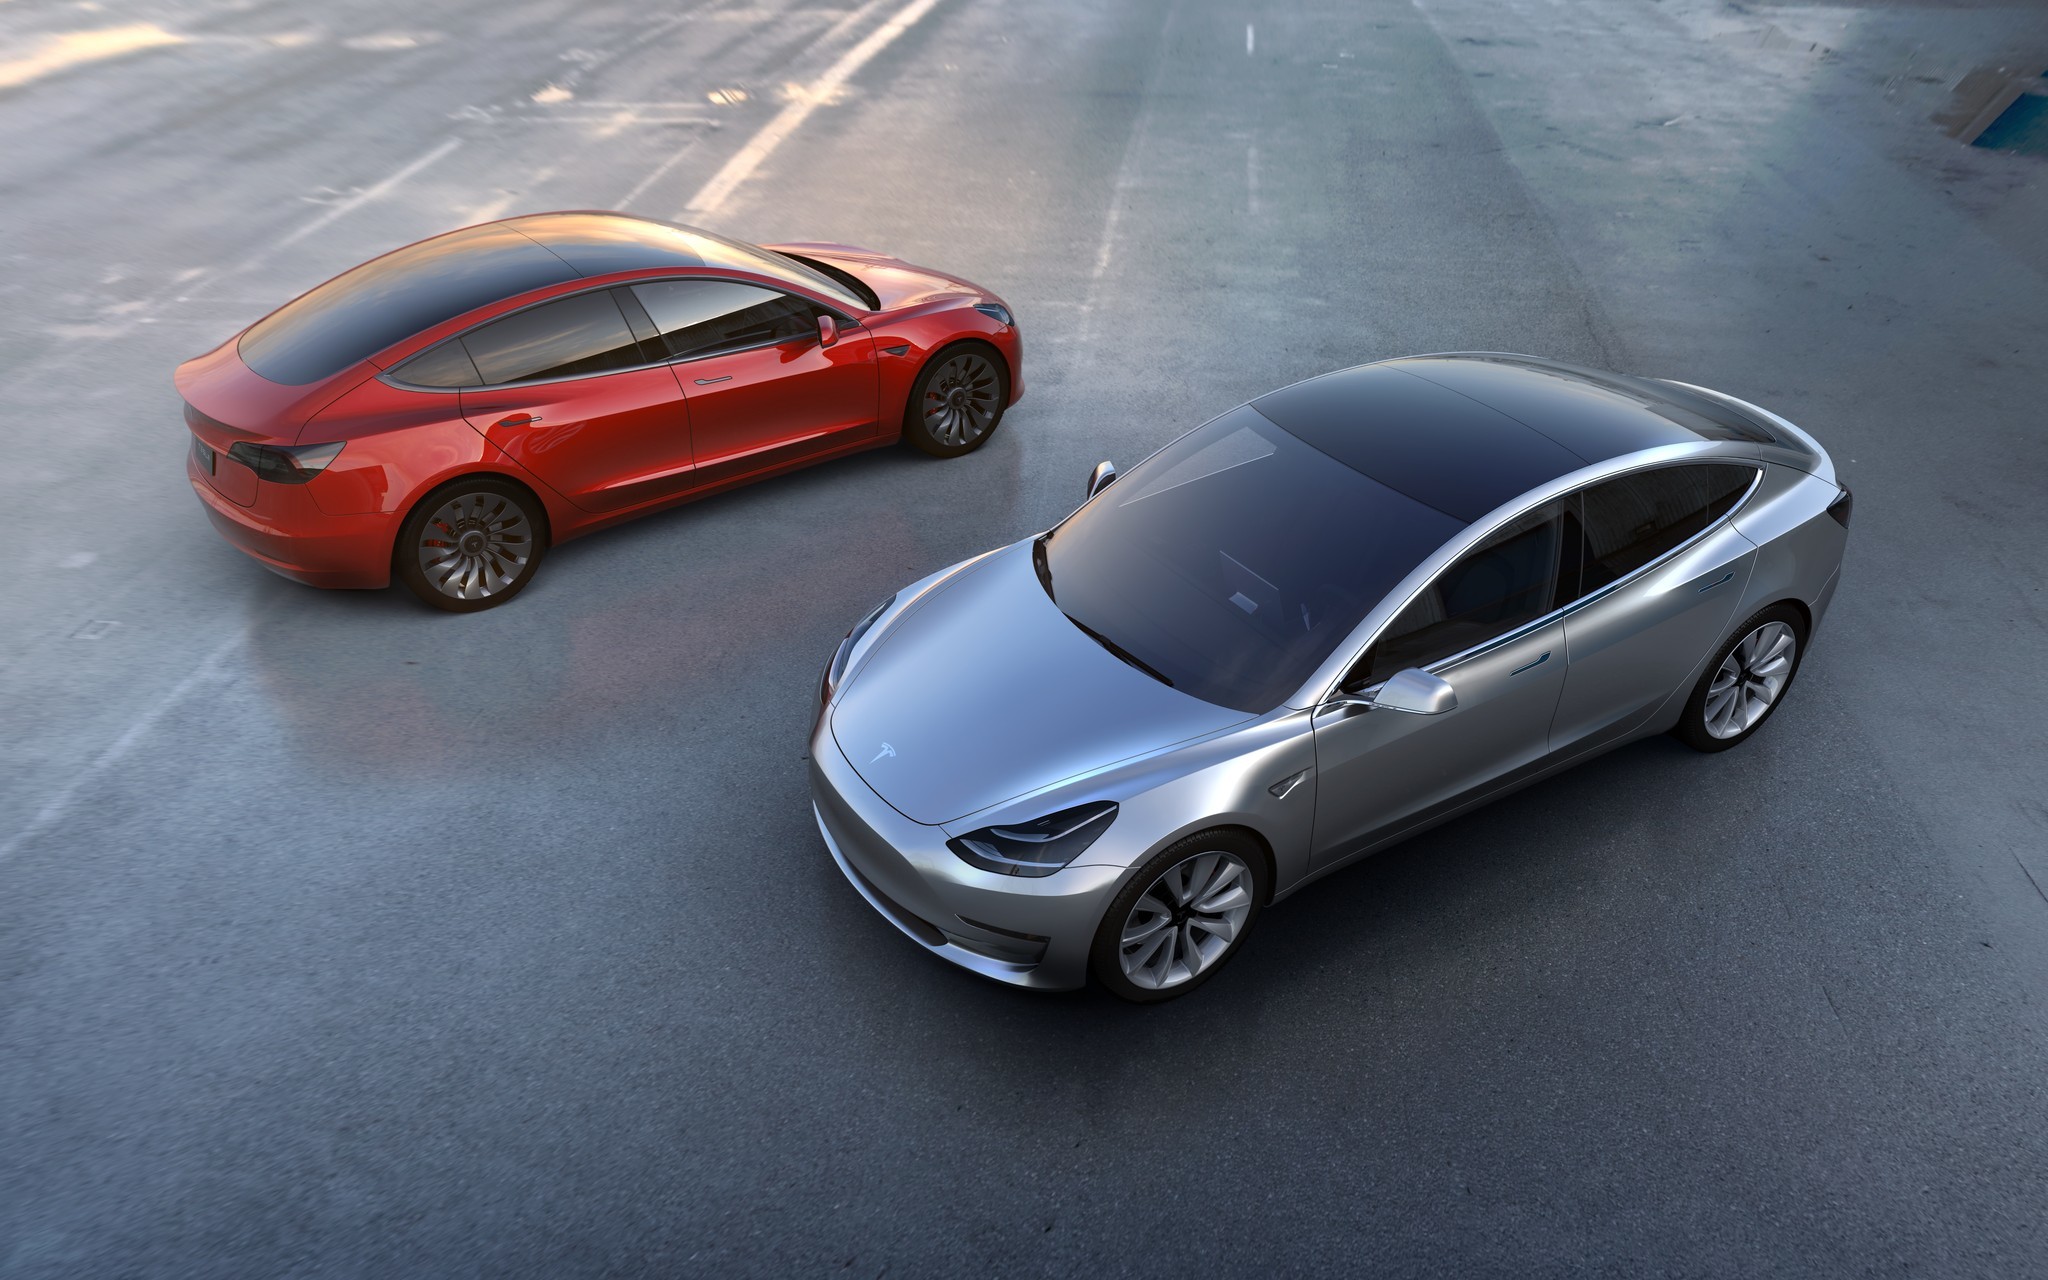 HD desktop wallpaper of a silver Tesla Model 3 alongside a red Tesla, representing Tesla Motors' electric vehicles.